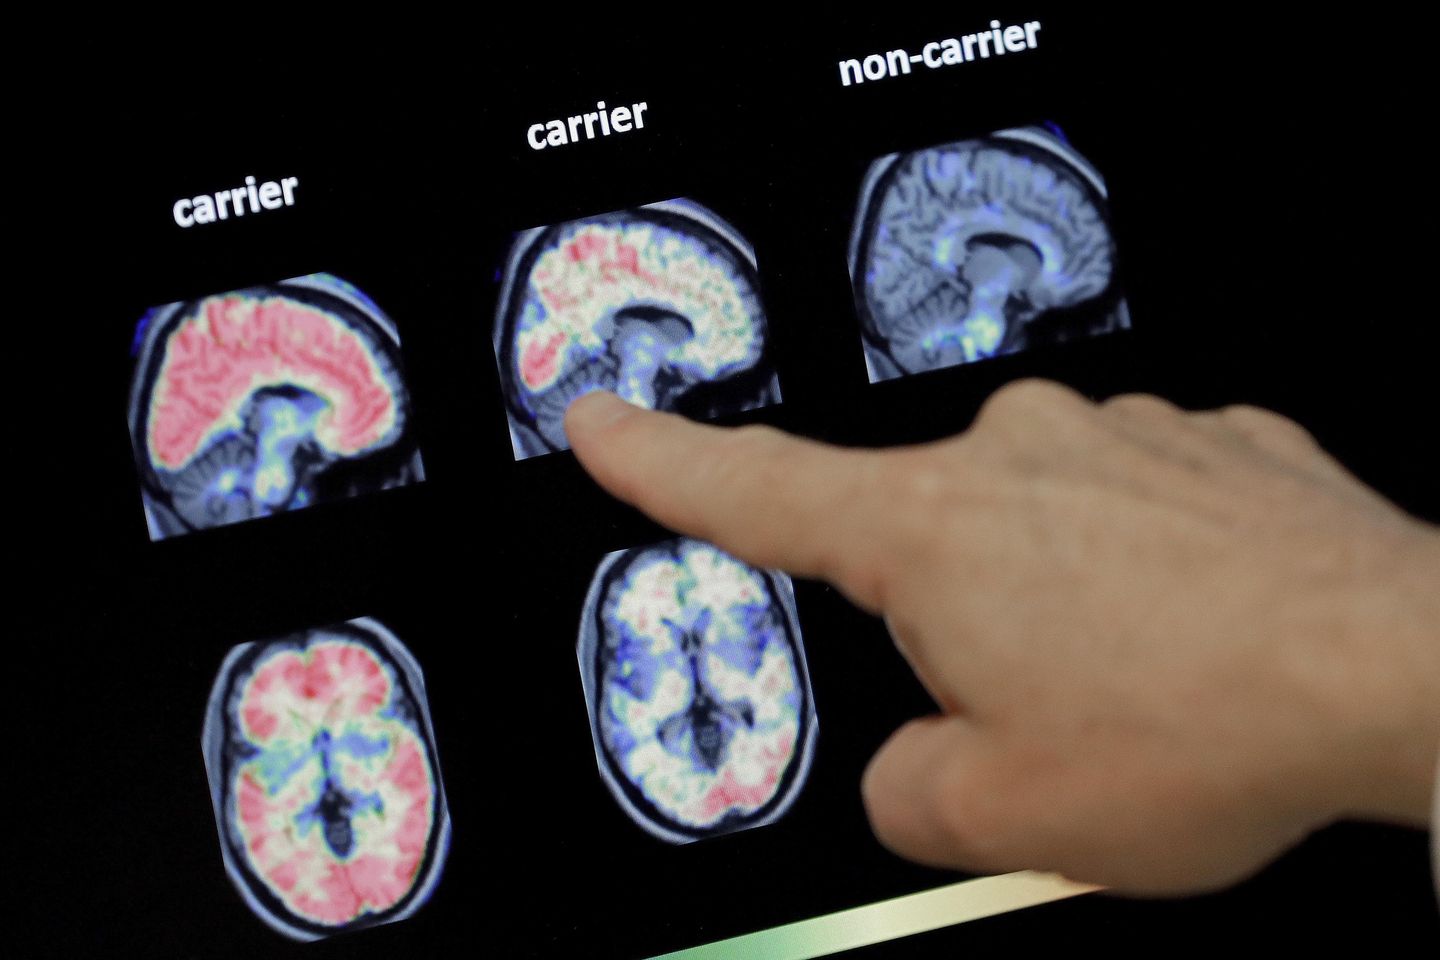 Slower brain development puts boys at greater addiction risk: NIH